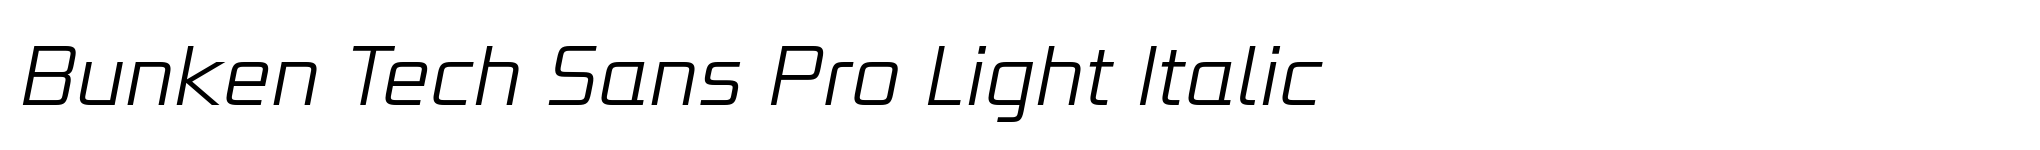 Bunken Tech Sans Pro Light Italic image